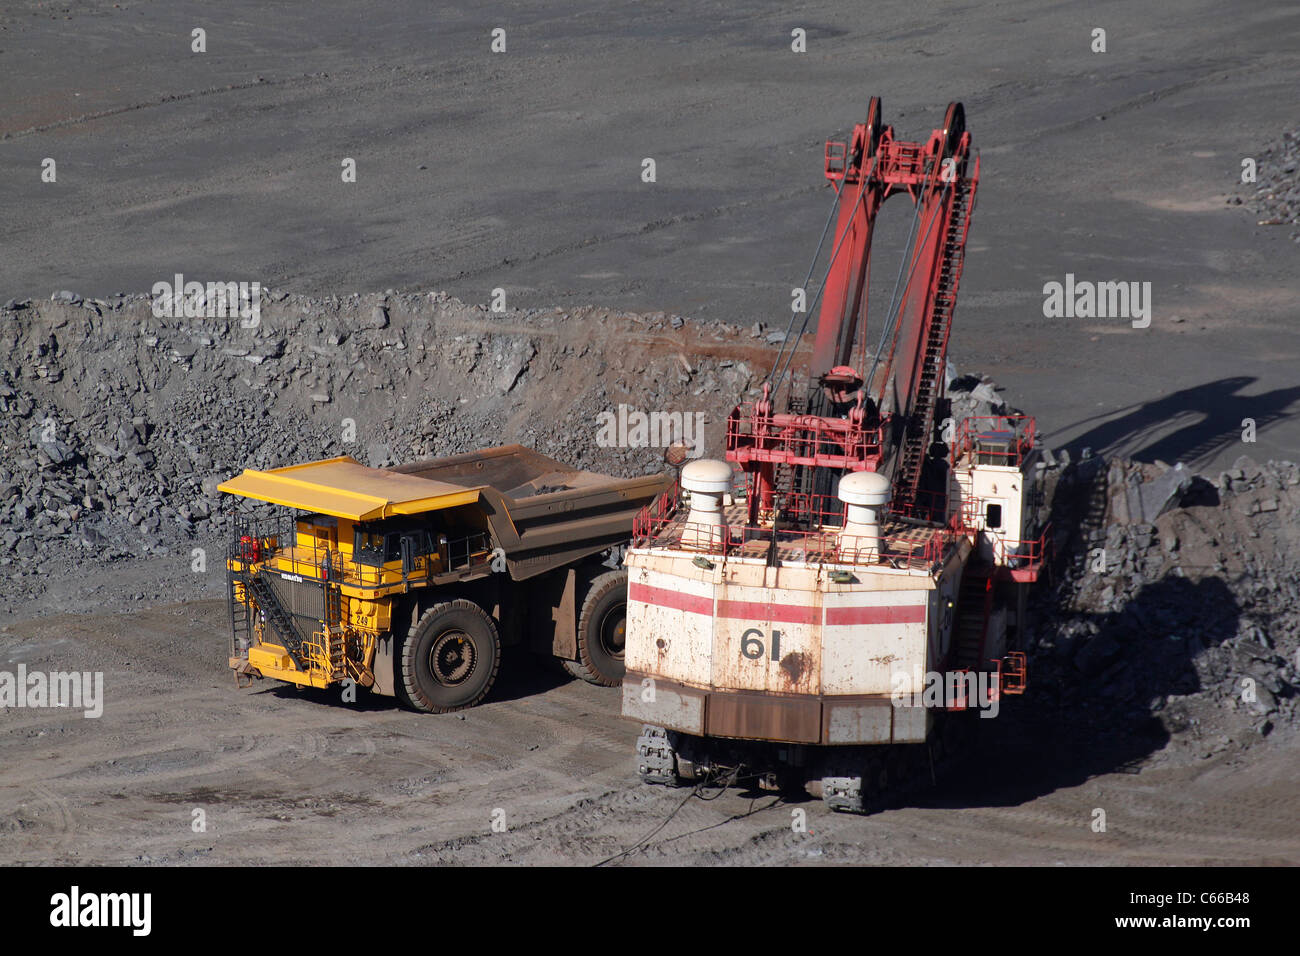 Rumpf – Rost – Mahoning Open Pit Eisenmine, Schaufel enorme laden ein Haul truck Stockfoto